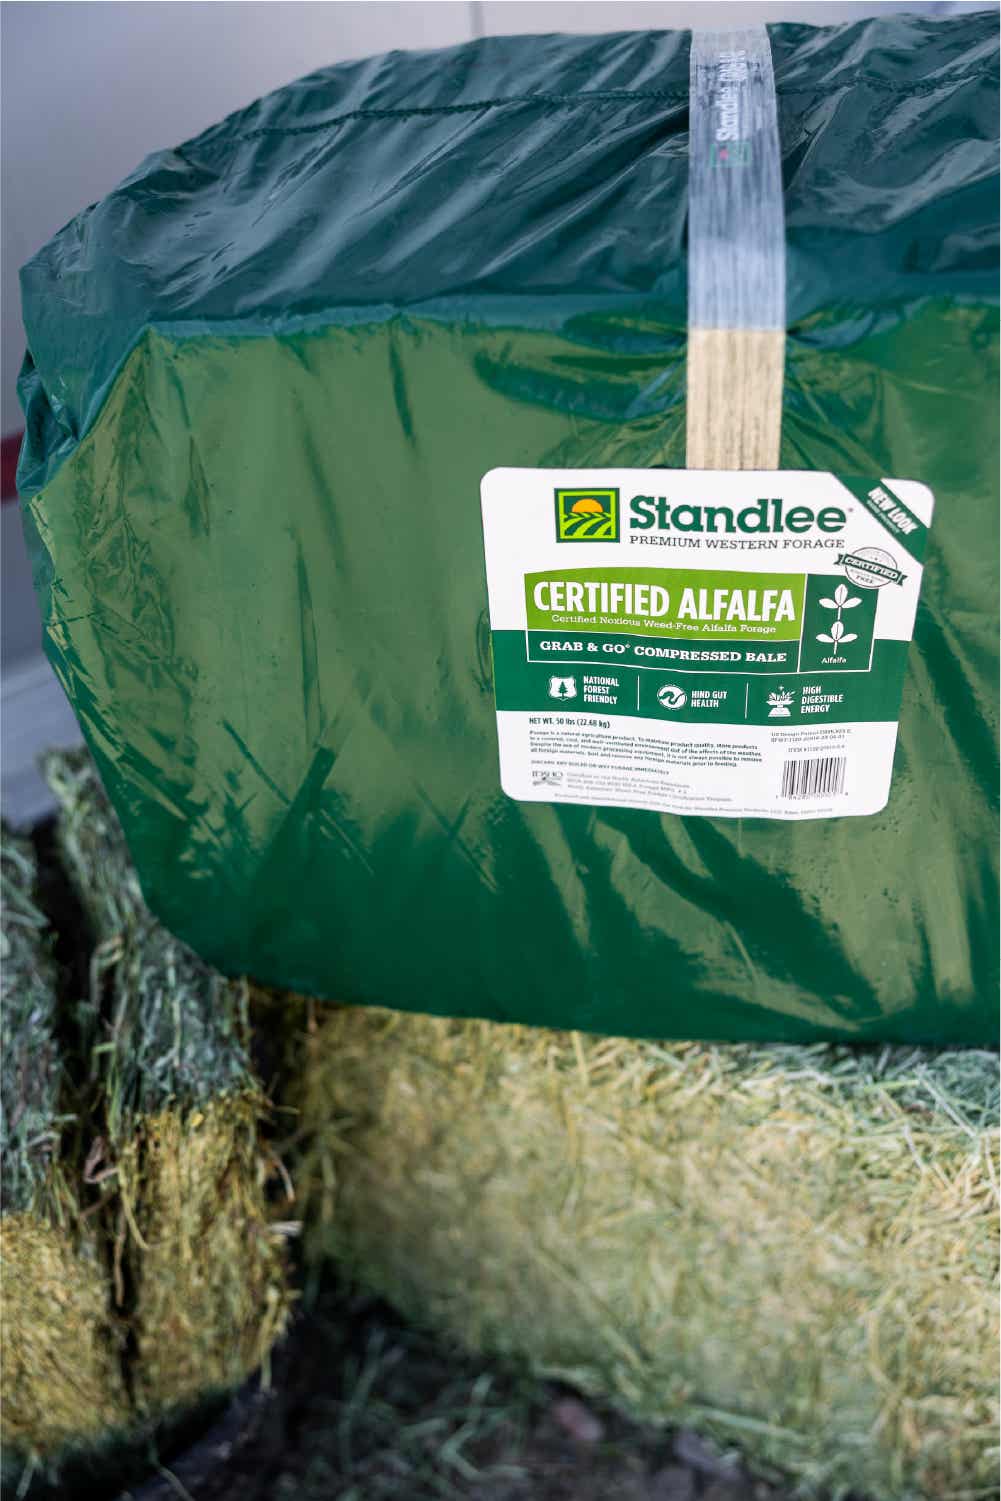 Standlee Premium Western Forage Certified Straw Compressed Bale 378010